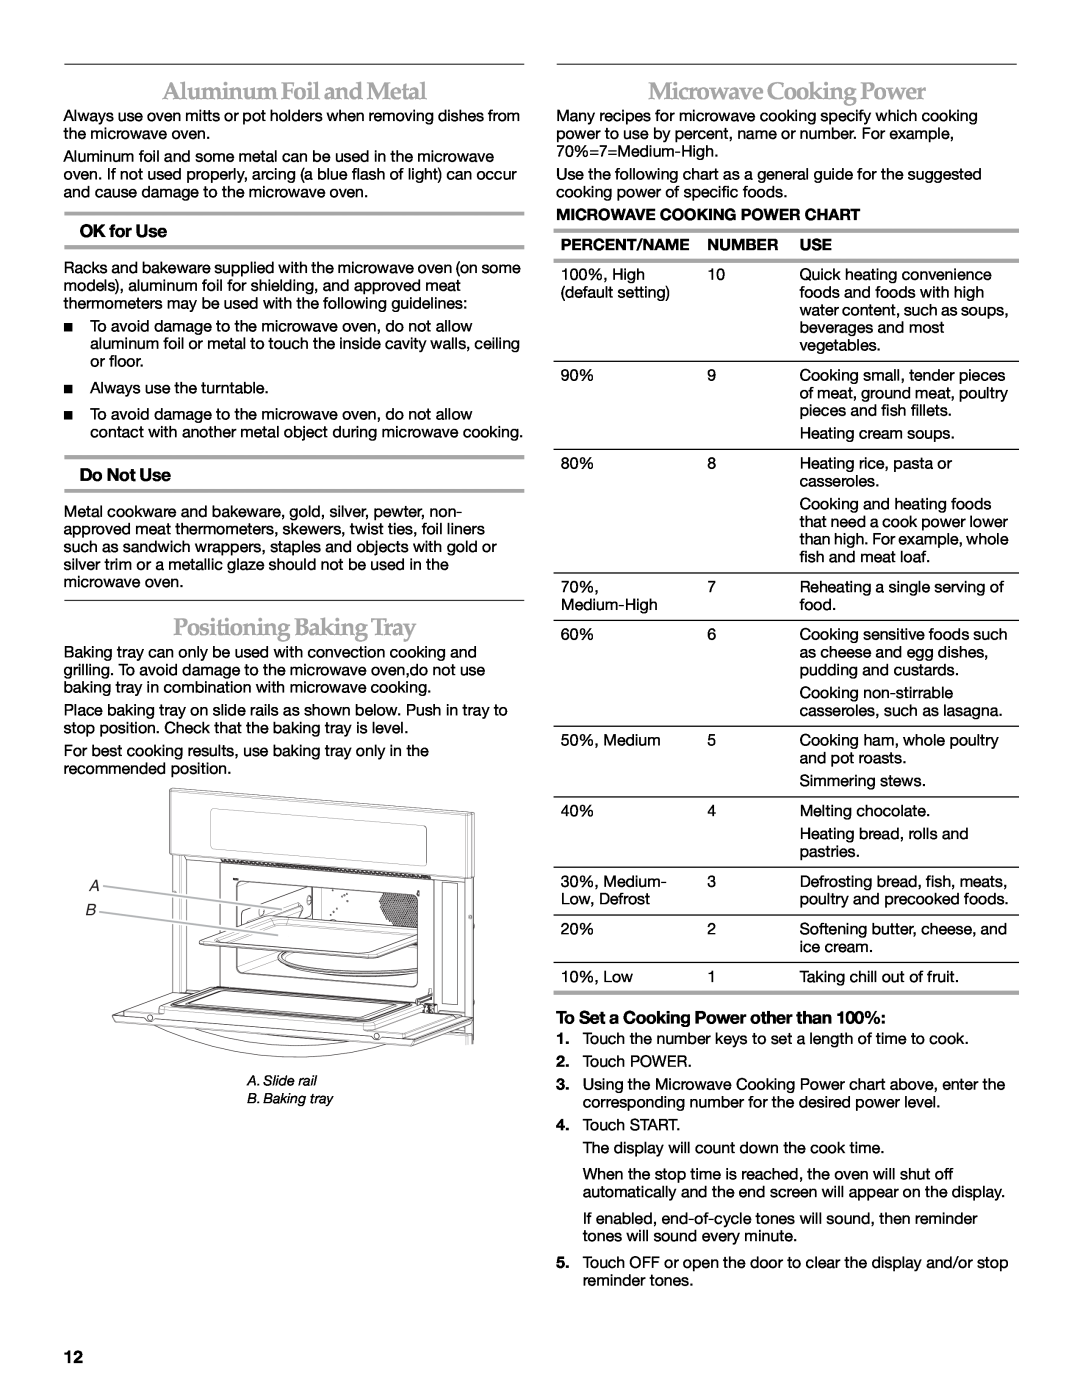 KitchenAid KEHU309 manual Aluminum Foil andMetal, PositioningBakingTray, Microwave Cooking Power, OK for Use, Do Not Use 